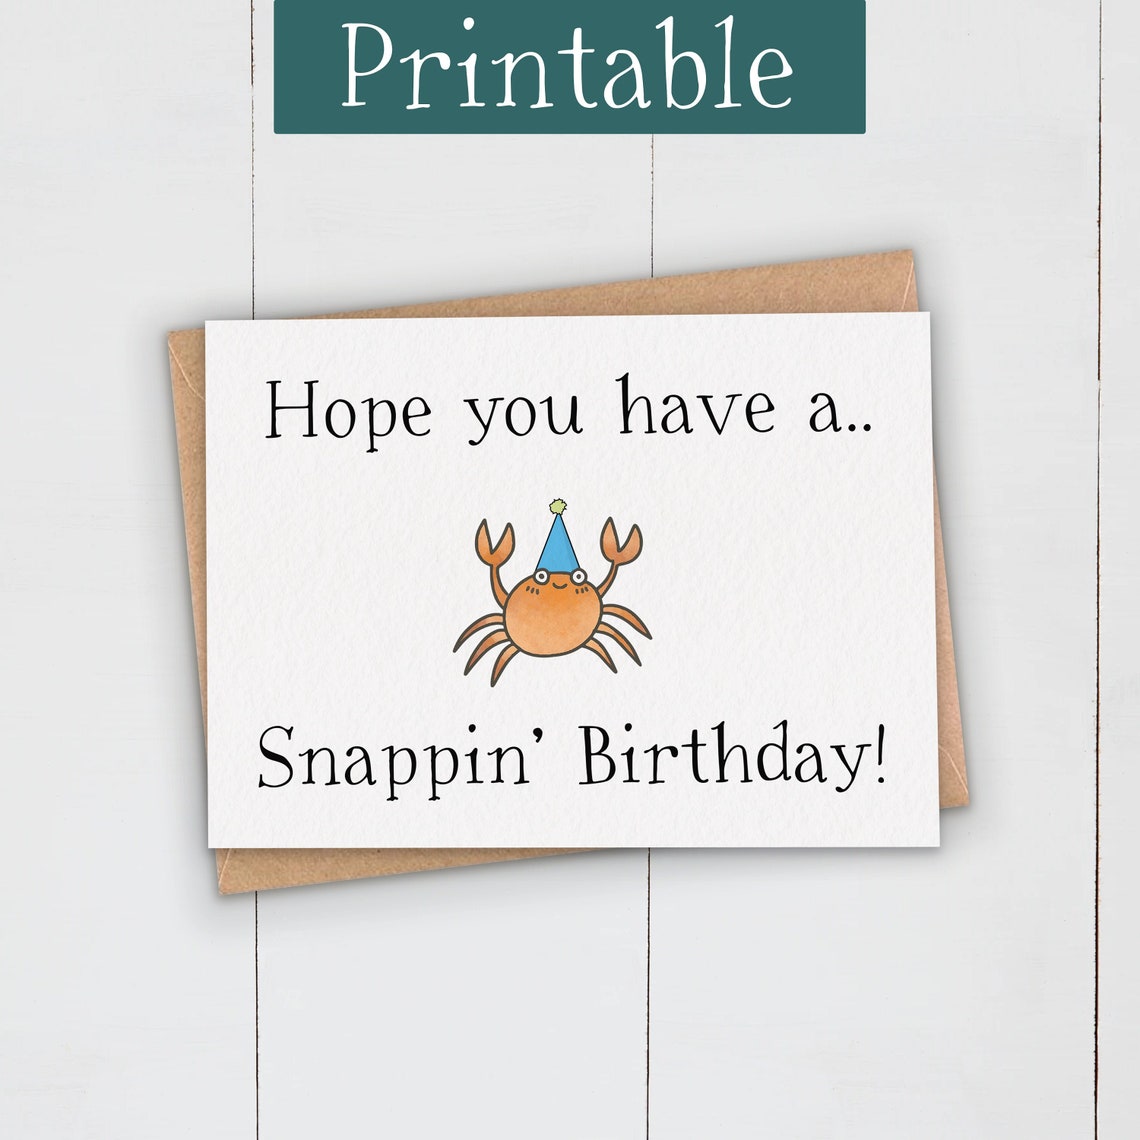 crab-birthday-card-printable-funny-birthday-card-cute-etsy